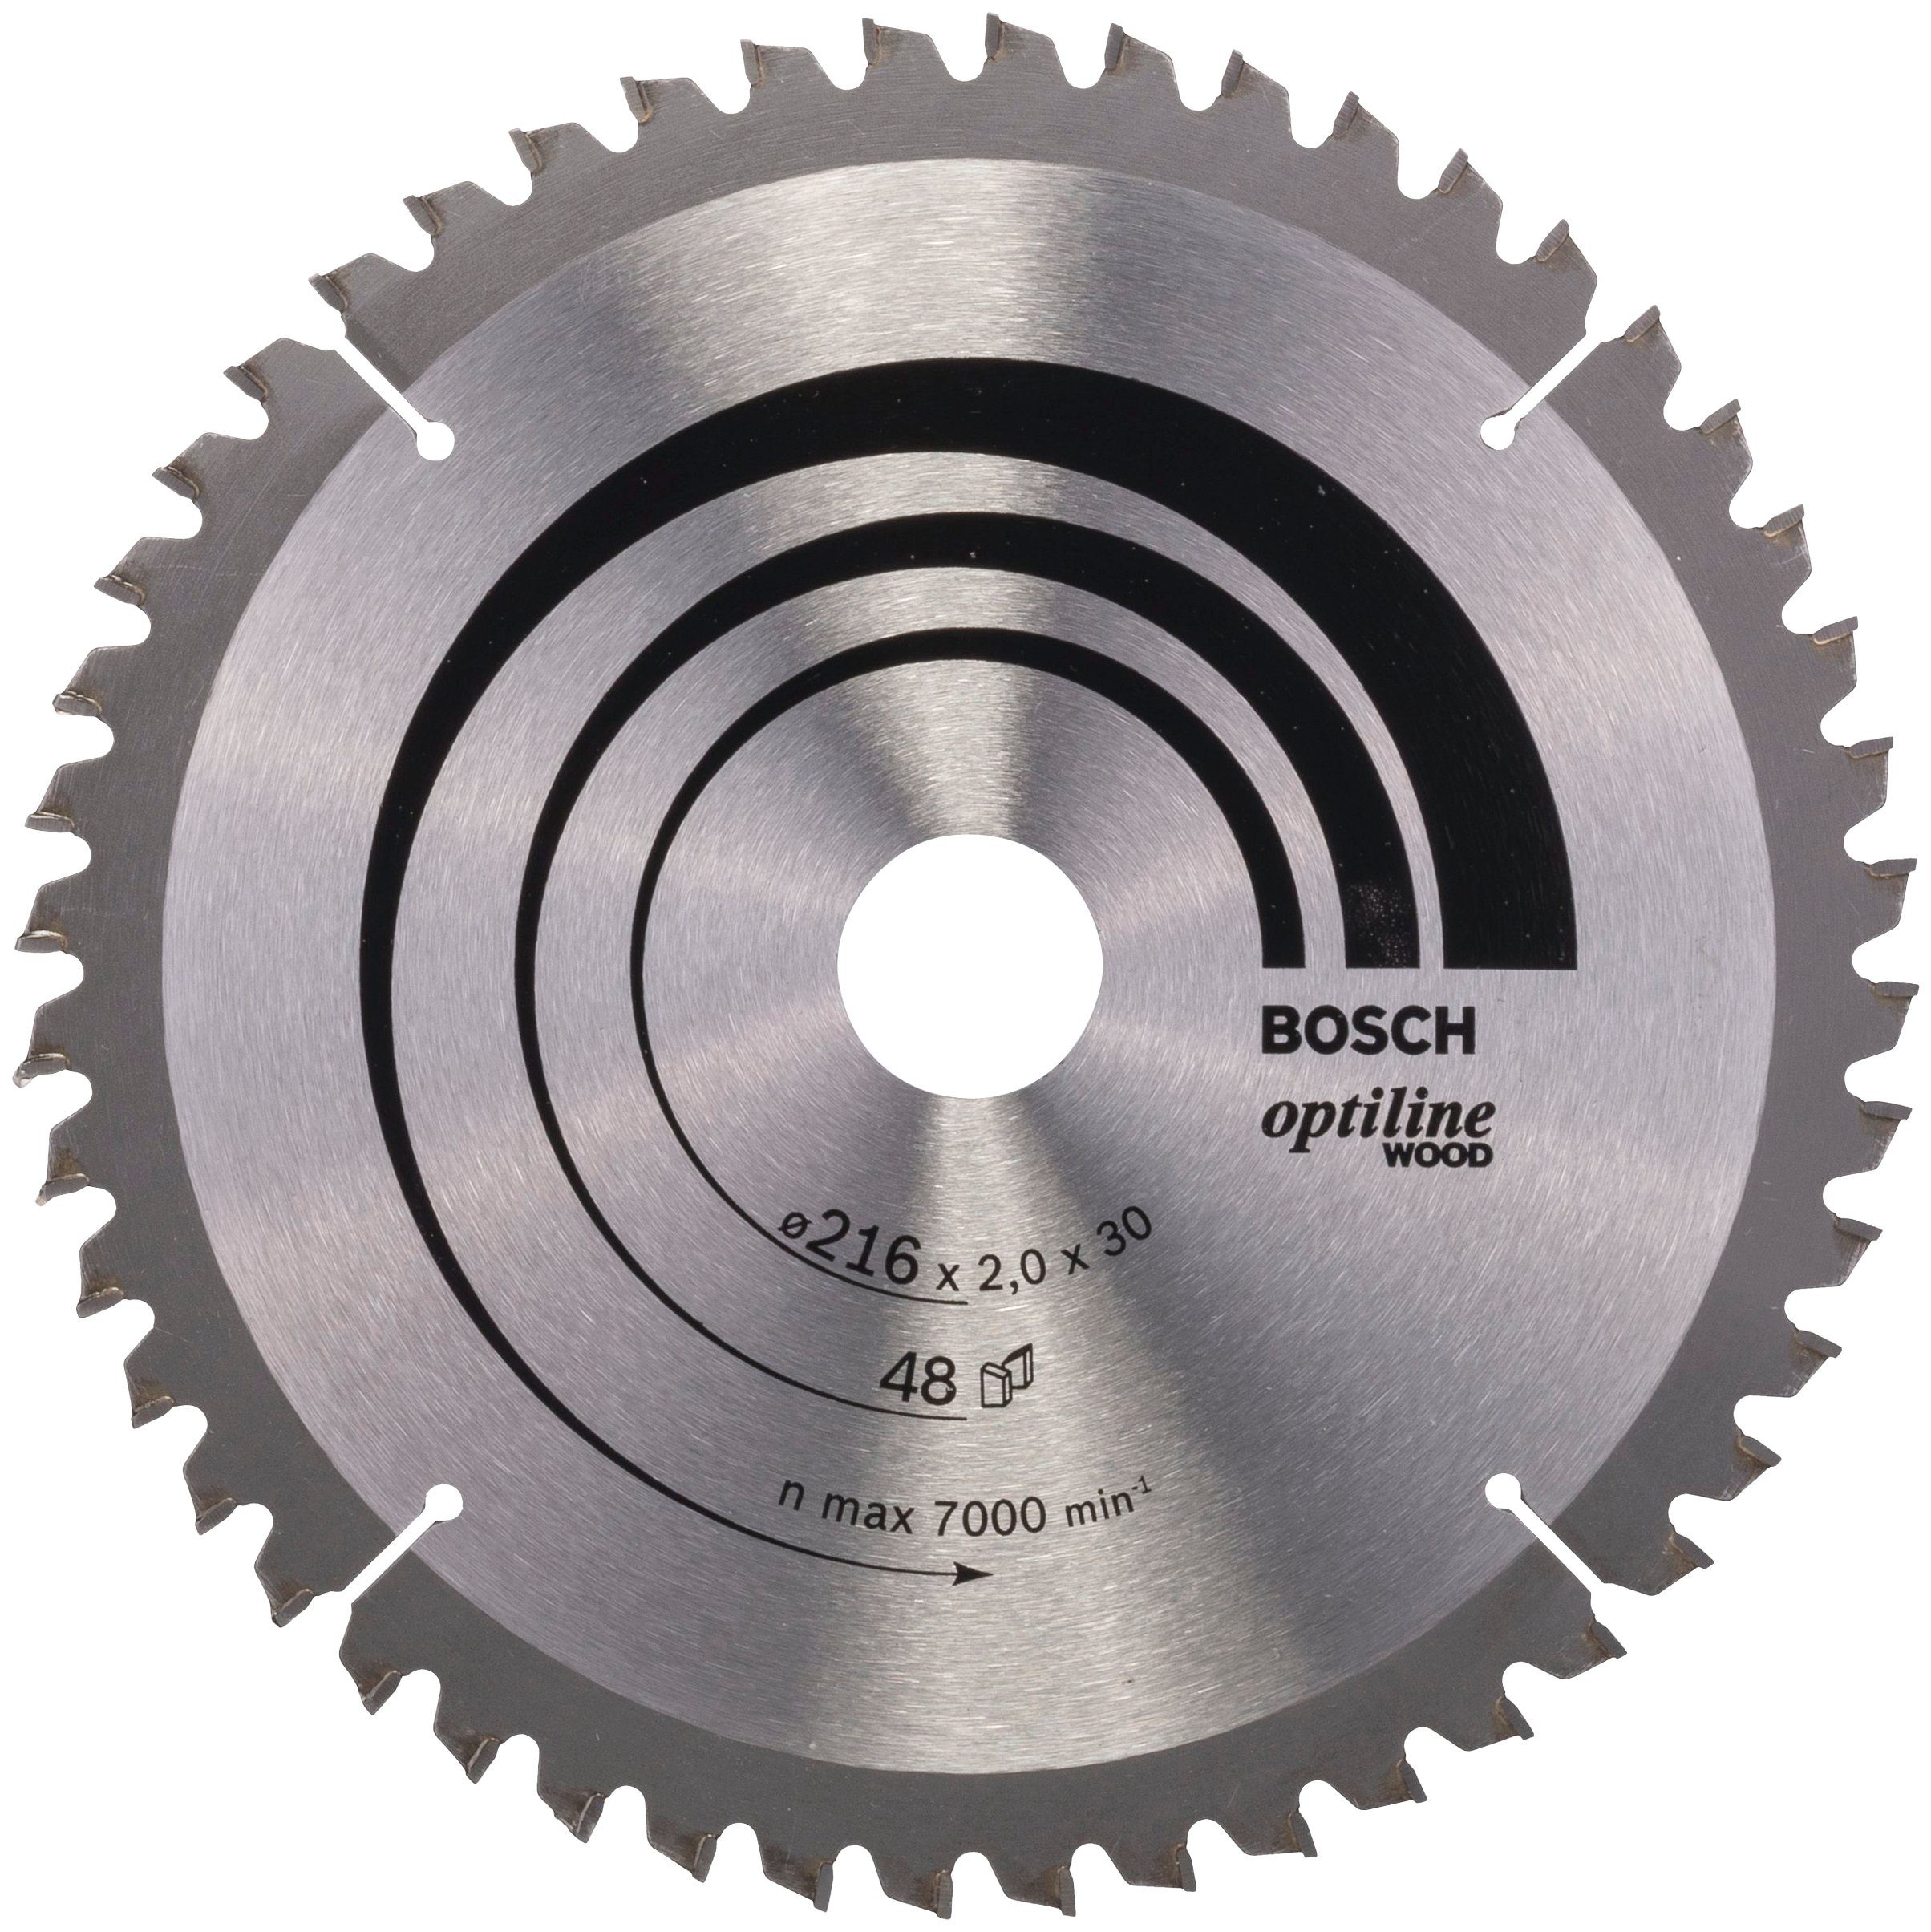 48, Bosch grob Optiline Mittel Professional - x 2,0 x Kreissägeblatt Wood, 30 mm, 216 Schnittgüte: